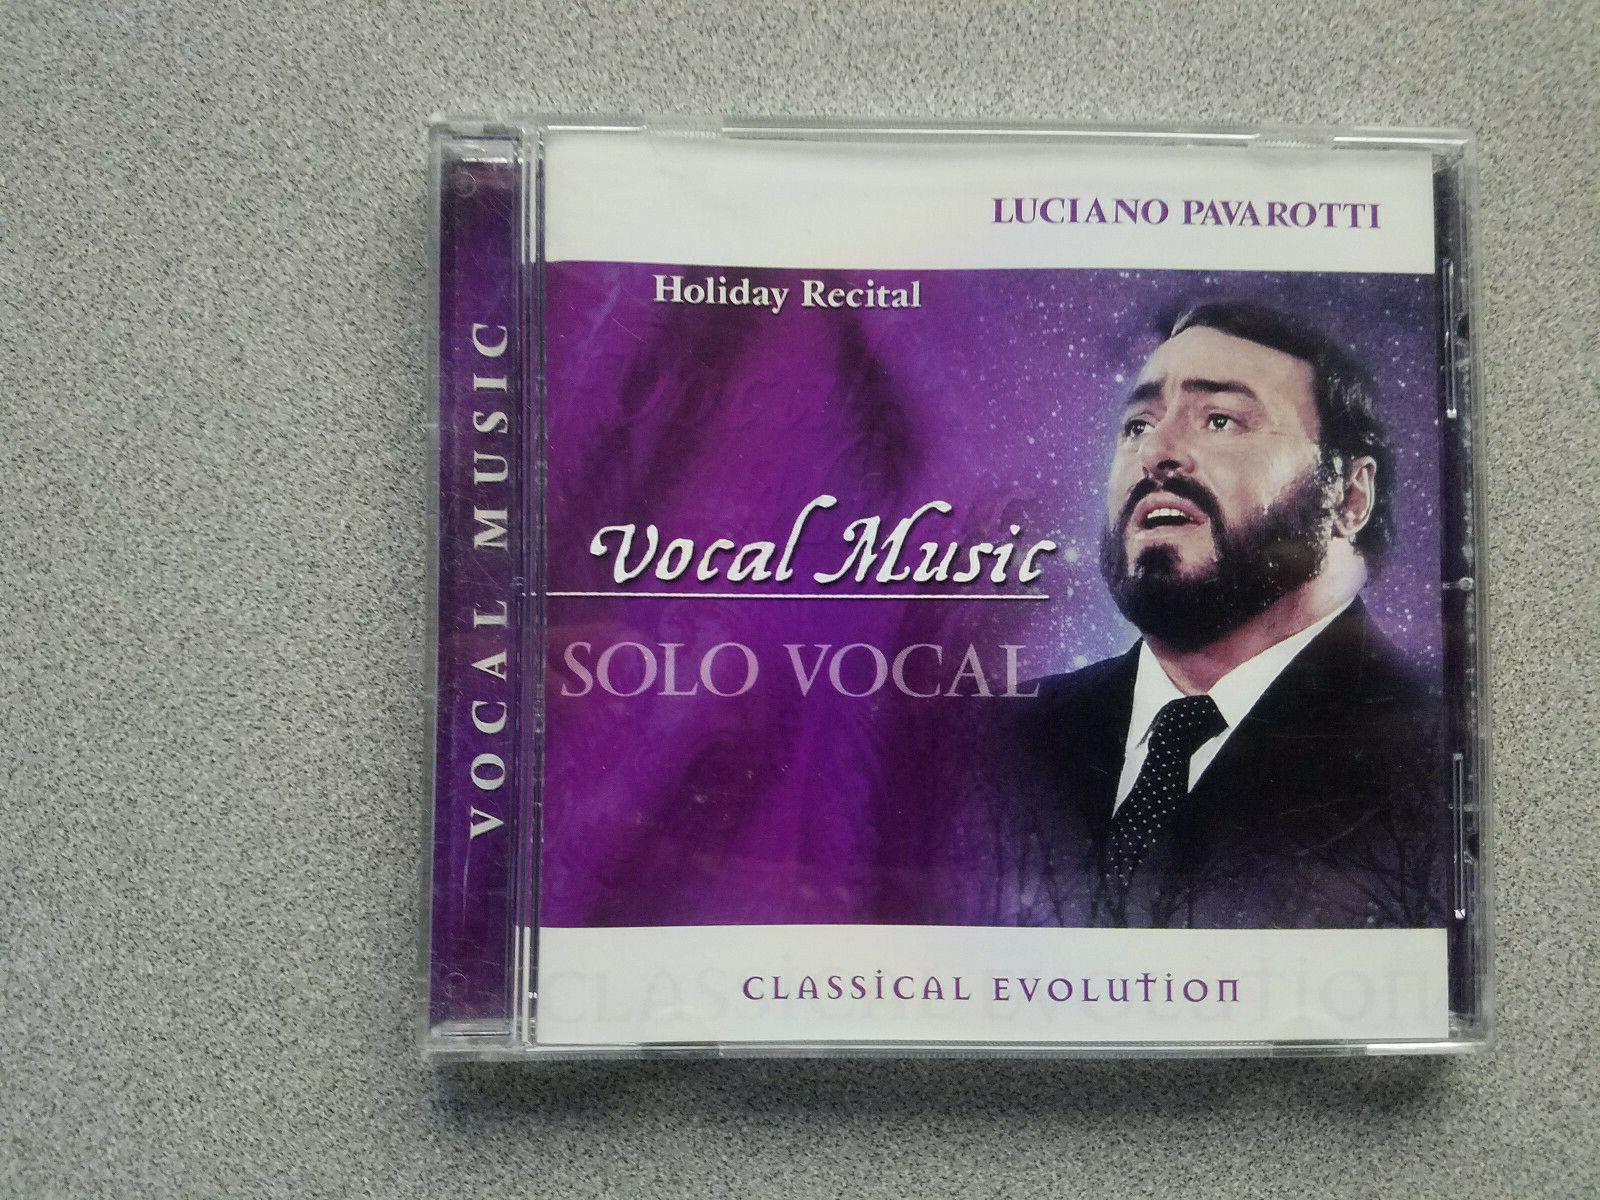 LUCIANO PAVAROTTI HOLIDAY RECITAL VOCAL MUSIC SOLO VOCAL CLASSICAL EVOLUTION CD